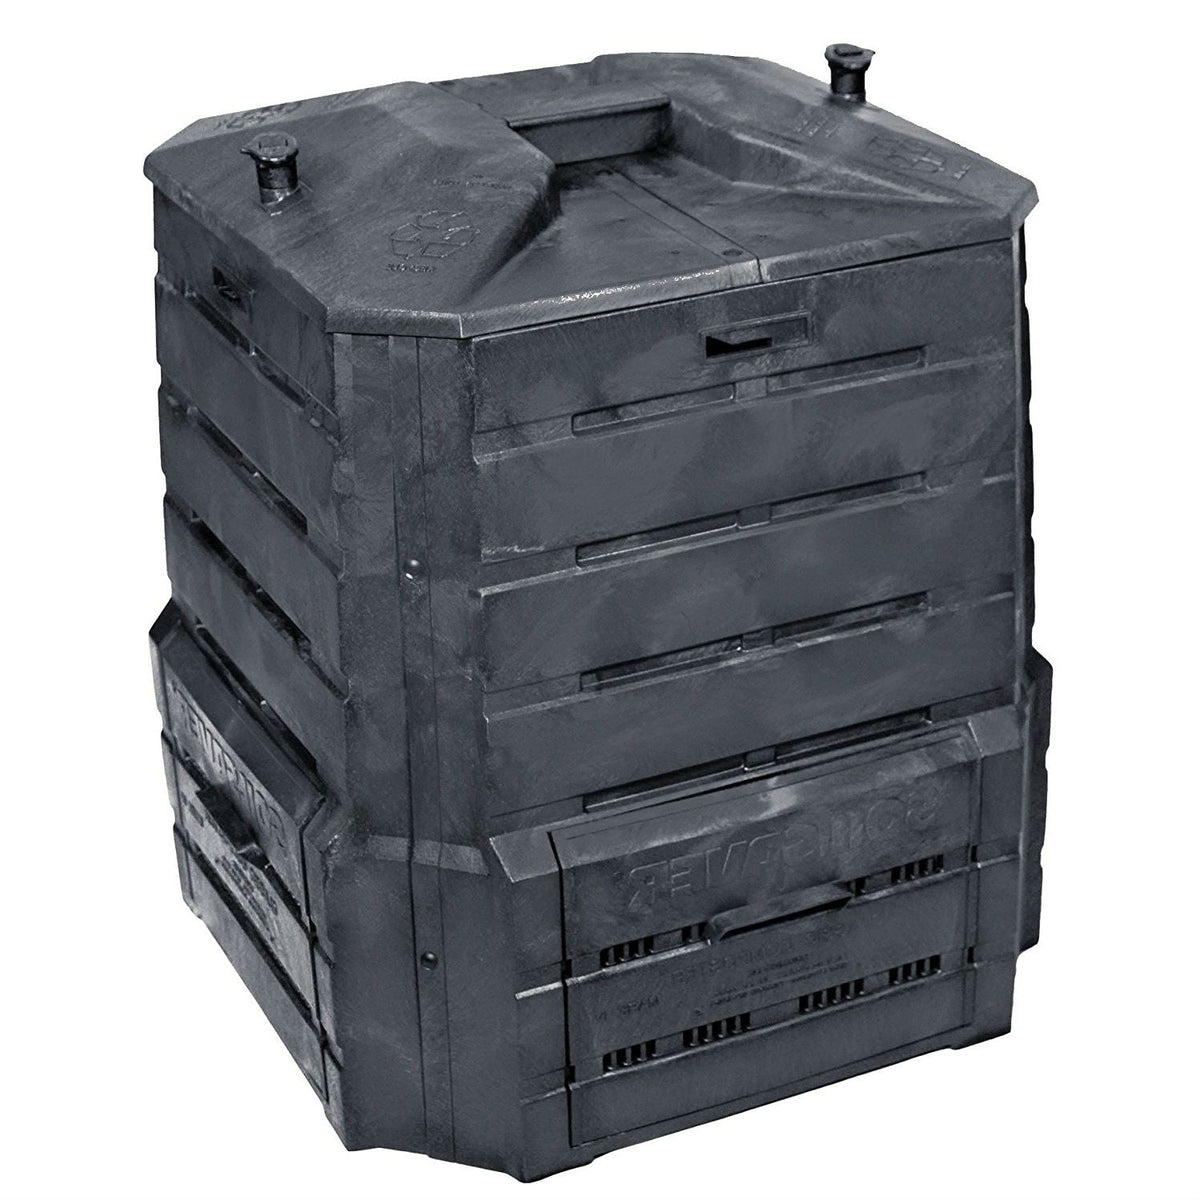 Black Plastic Compost Bin Composter for Home Garden Composting - 94 Gallon